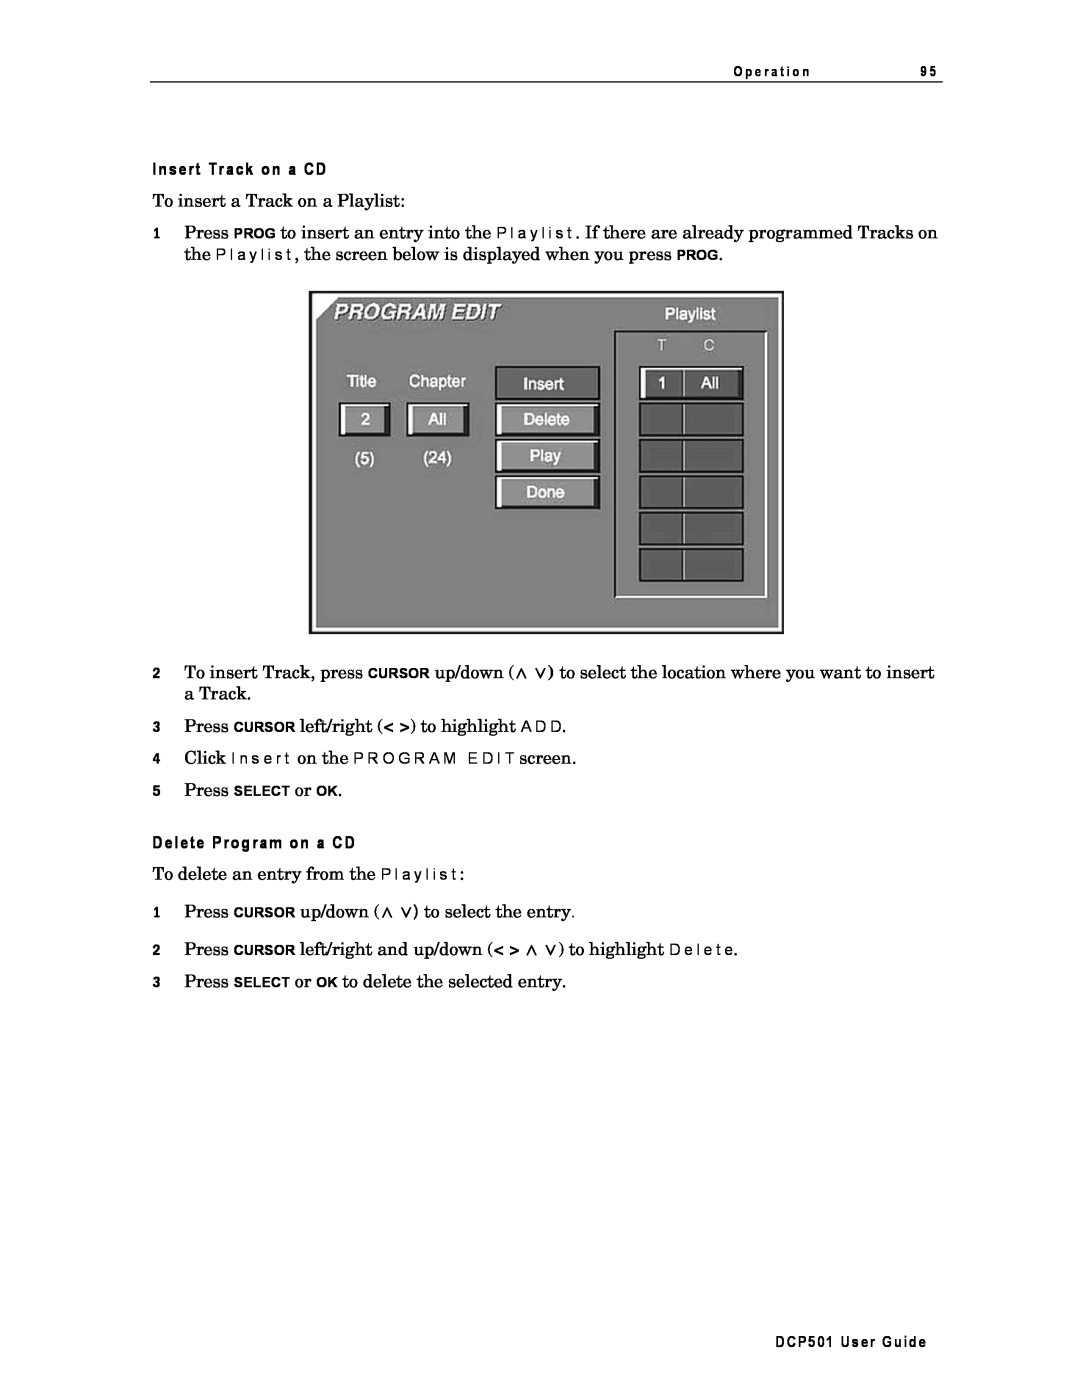 Motorola DCP501 manual Insert Track on a CD, Delete Program on a CD 